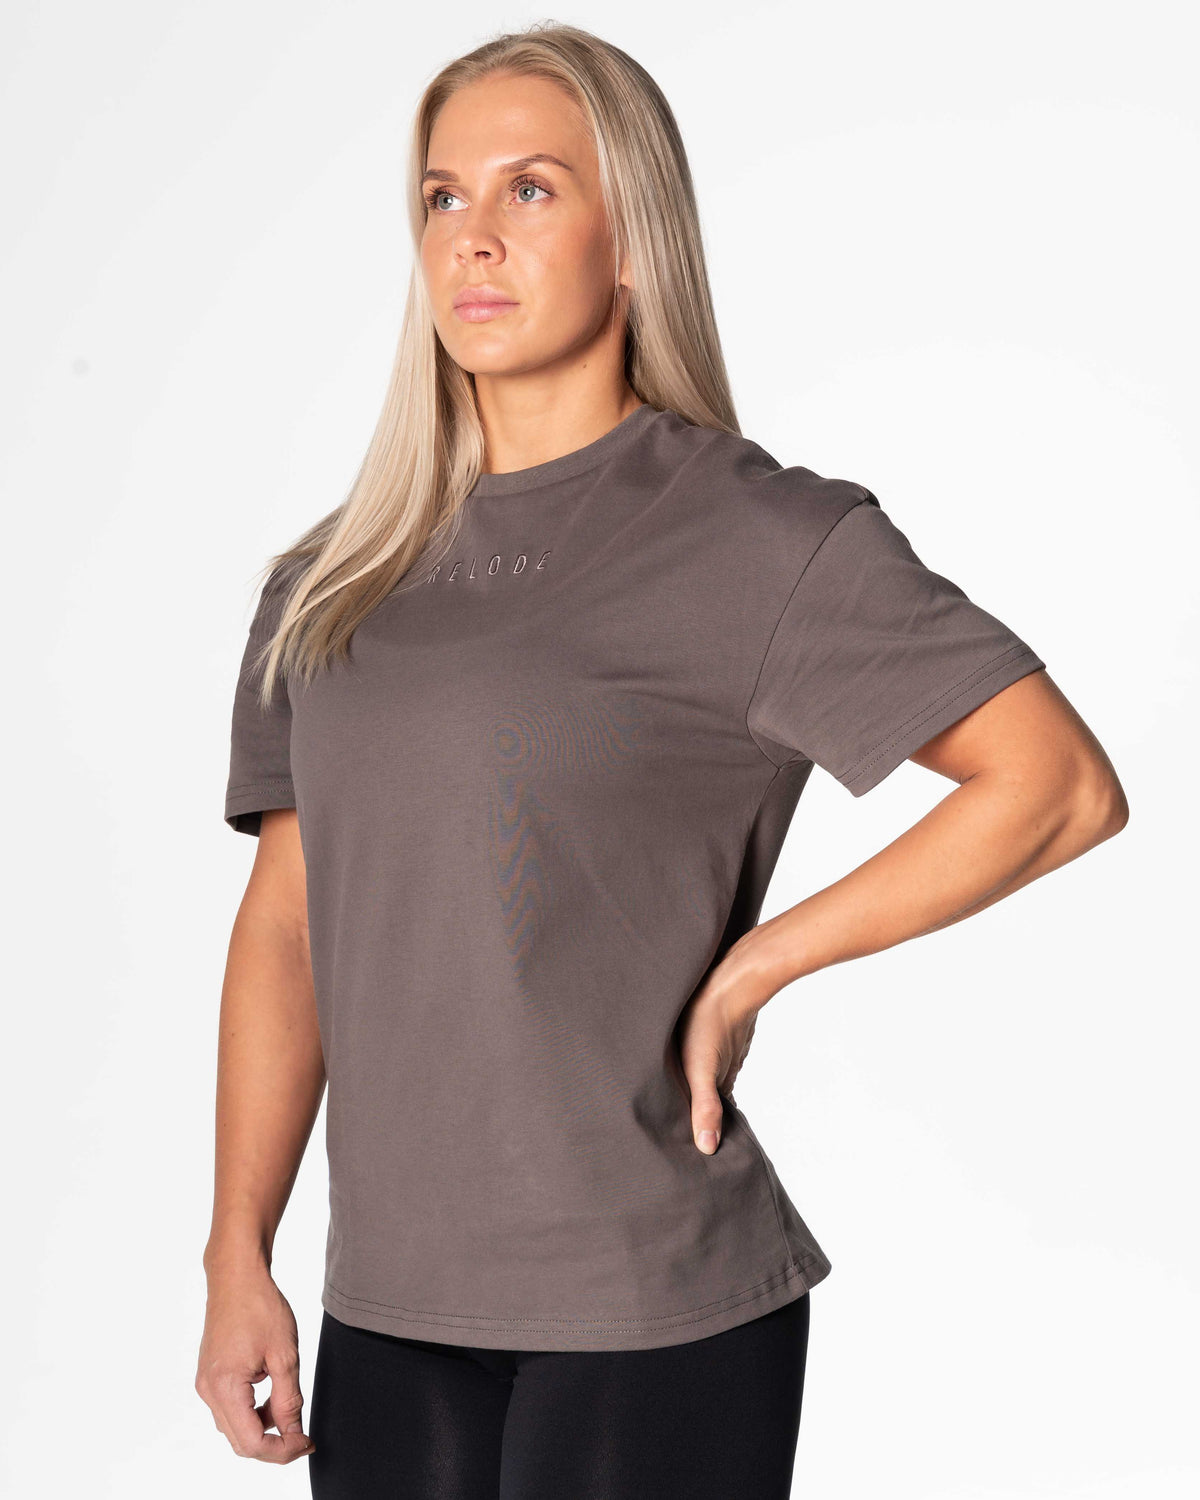 Maverick Women's T-shirt - Gray